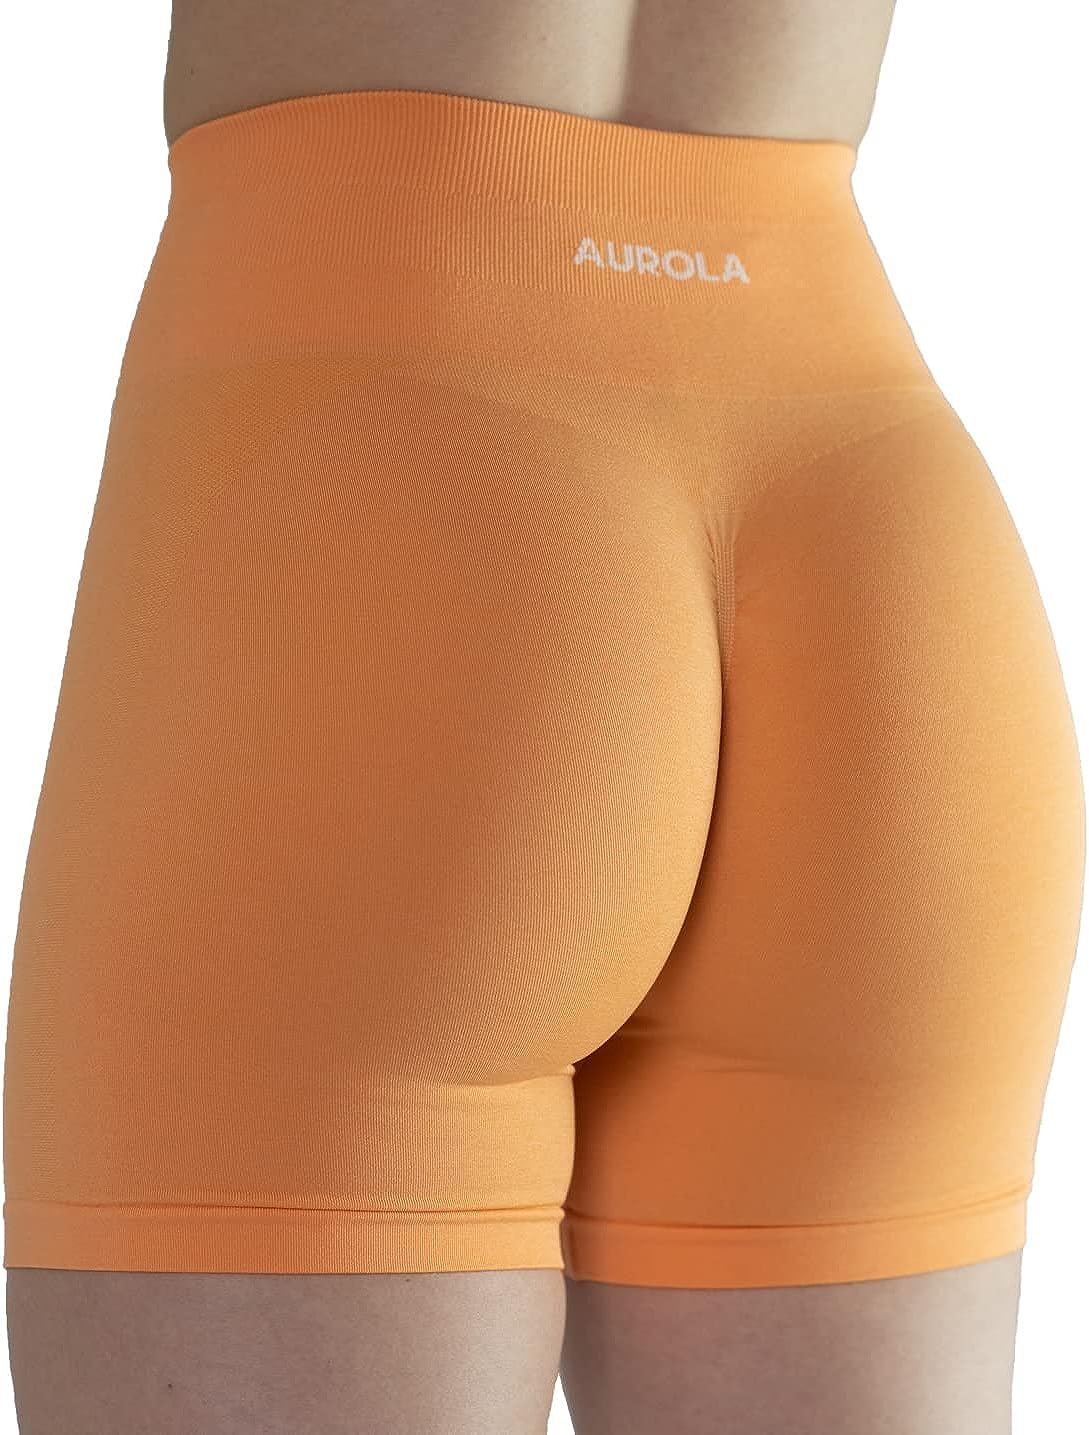 FIRST RANK AUROLA Intensify Workout Shorts for Women Seamless Scrunch Short Gym Yoga Running Sport Active Exercise Fitness Shorts